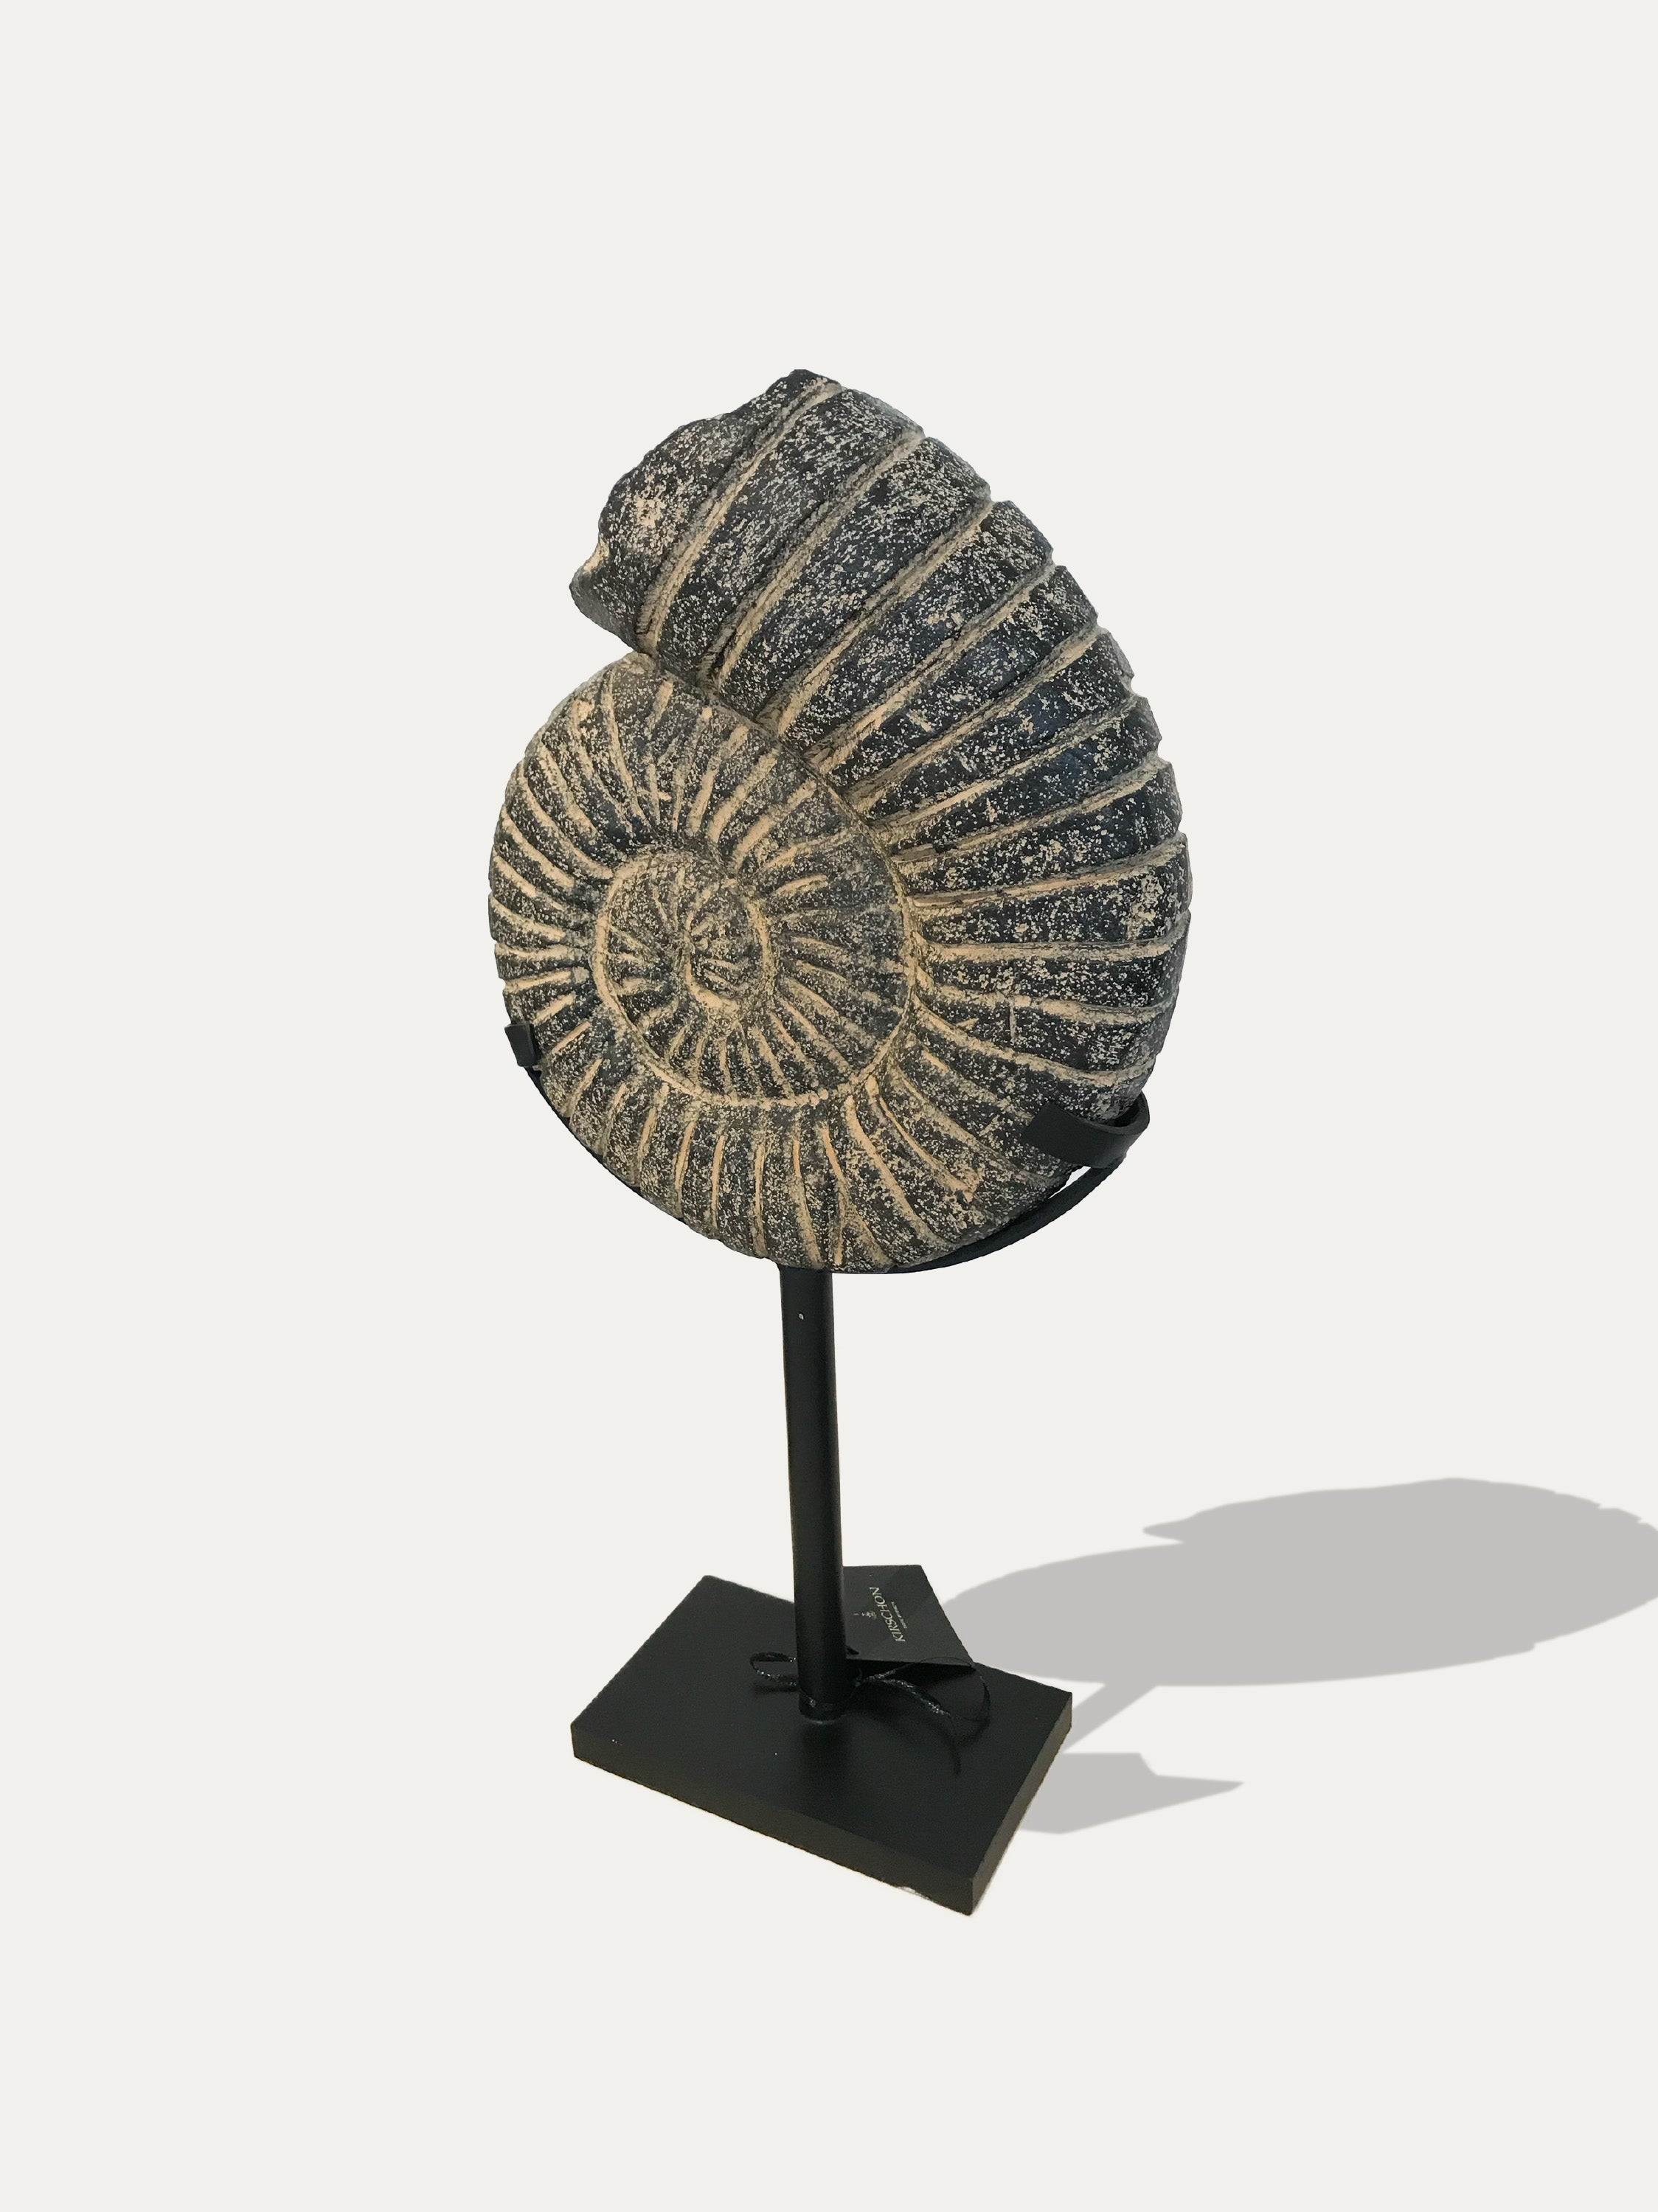 Black Ammonite stone statue from Java - Asian art from Kirschon